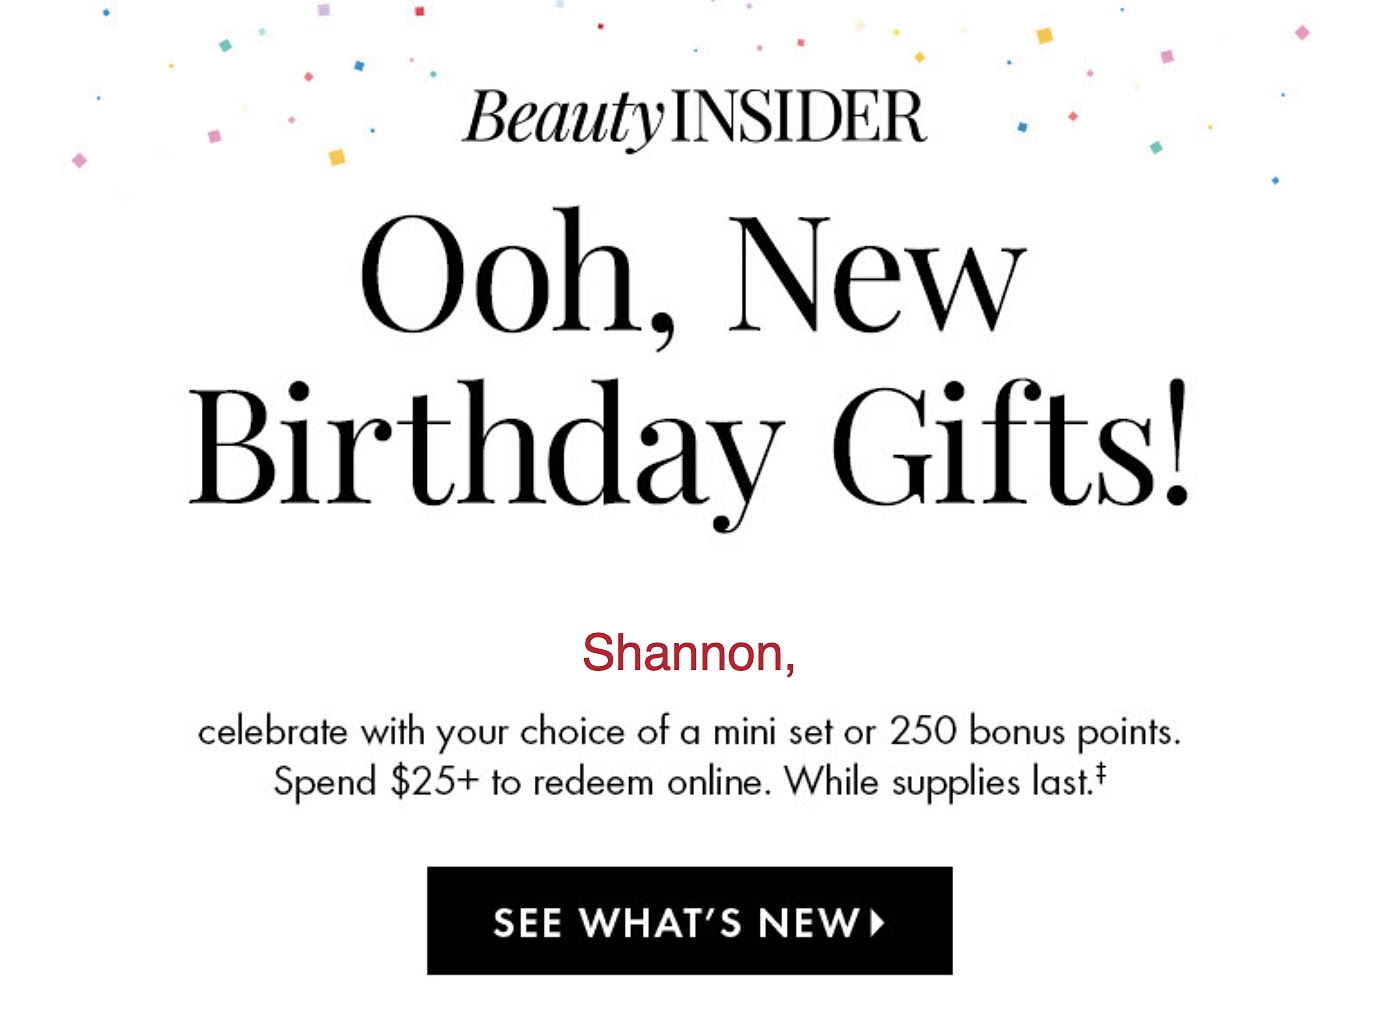 Sephora’s birthday offer email